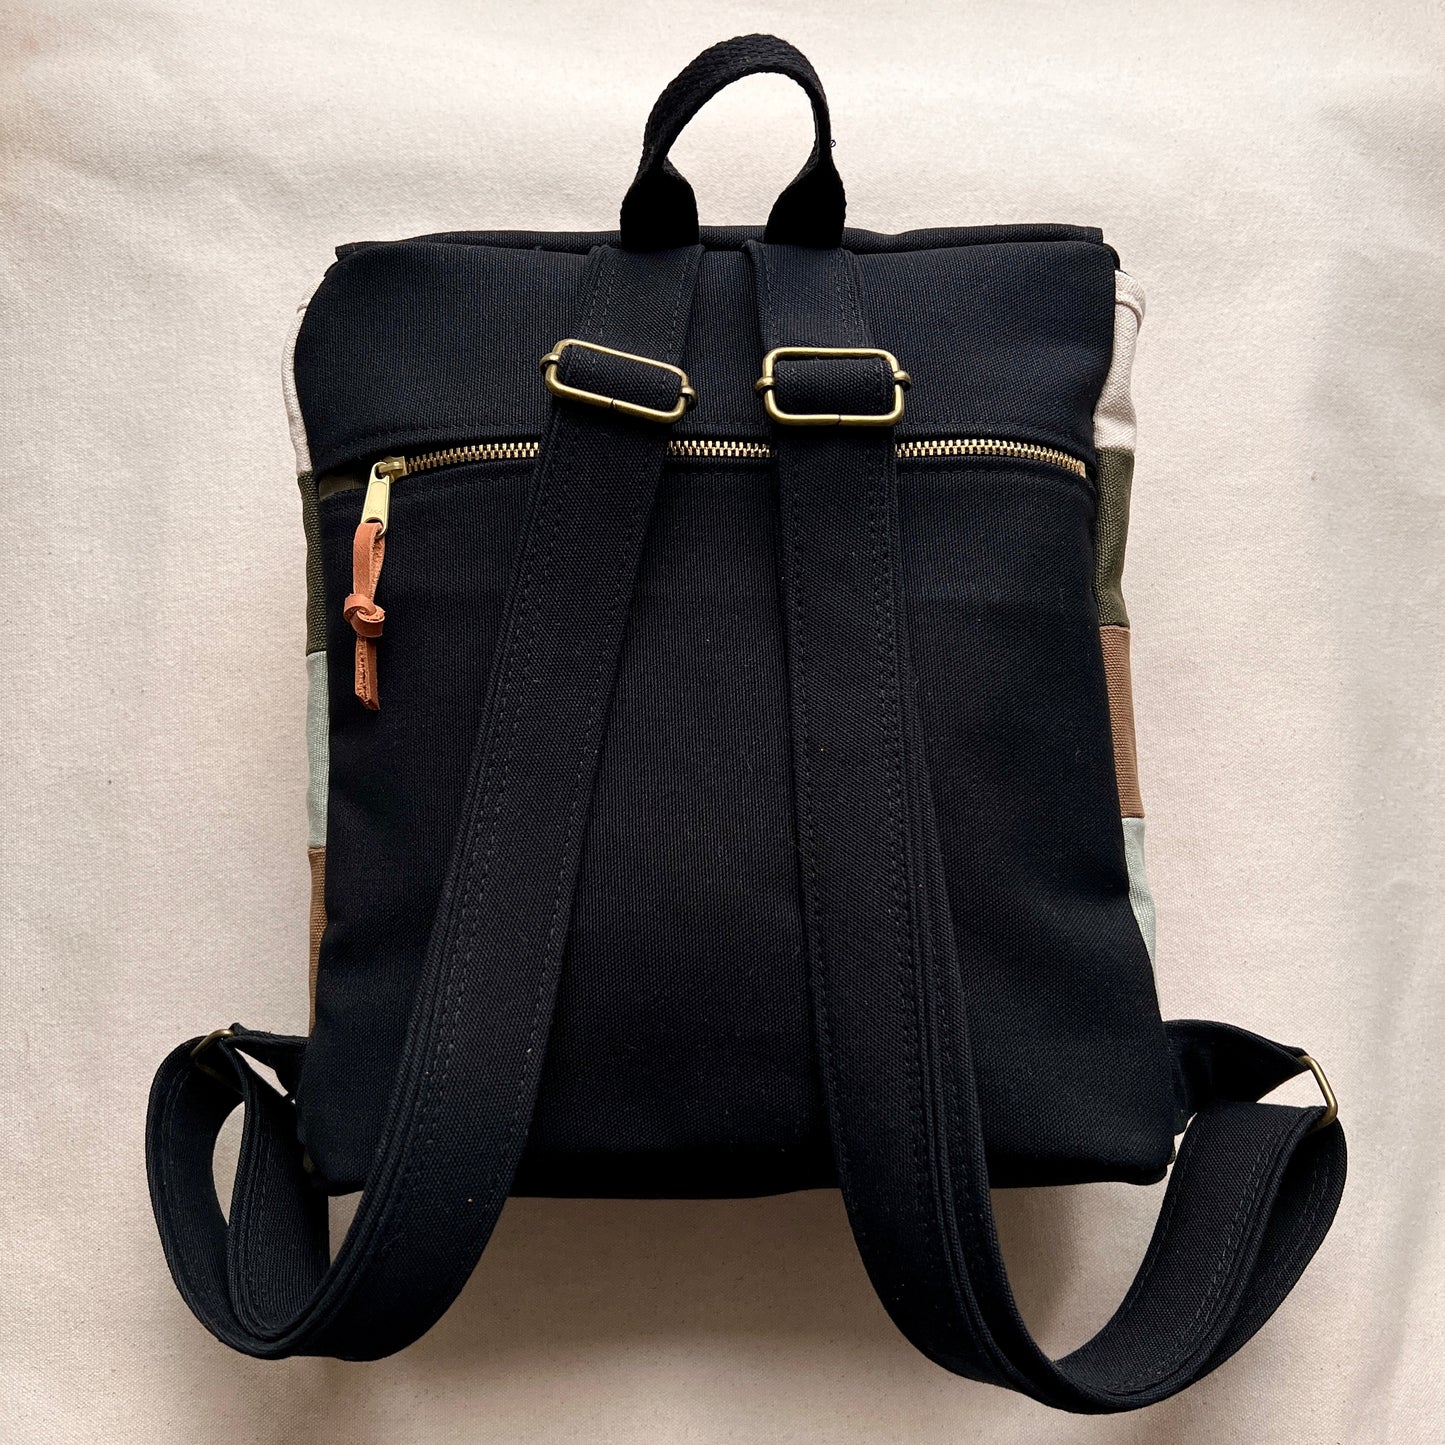 nova star backpack, forest/evergreen/mustard/seaglass etc